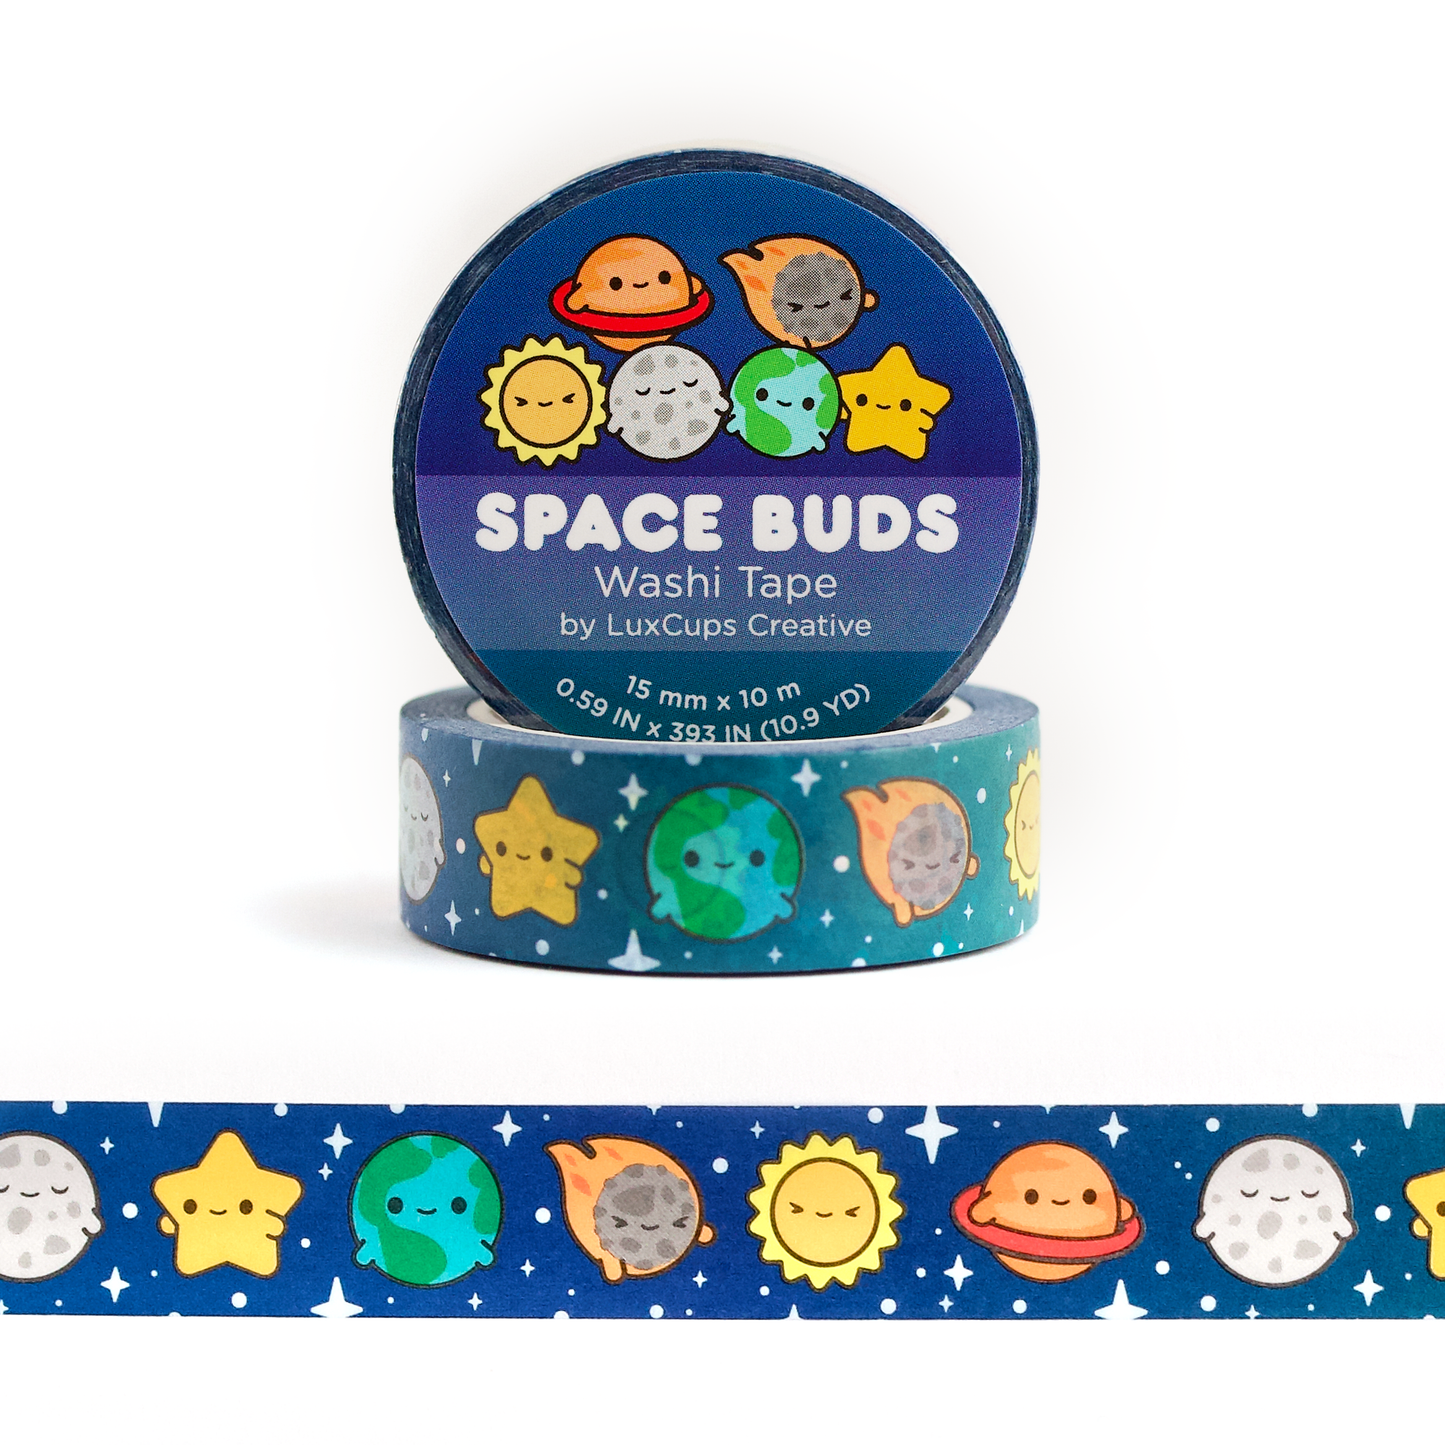 Space Buds Washi Tape